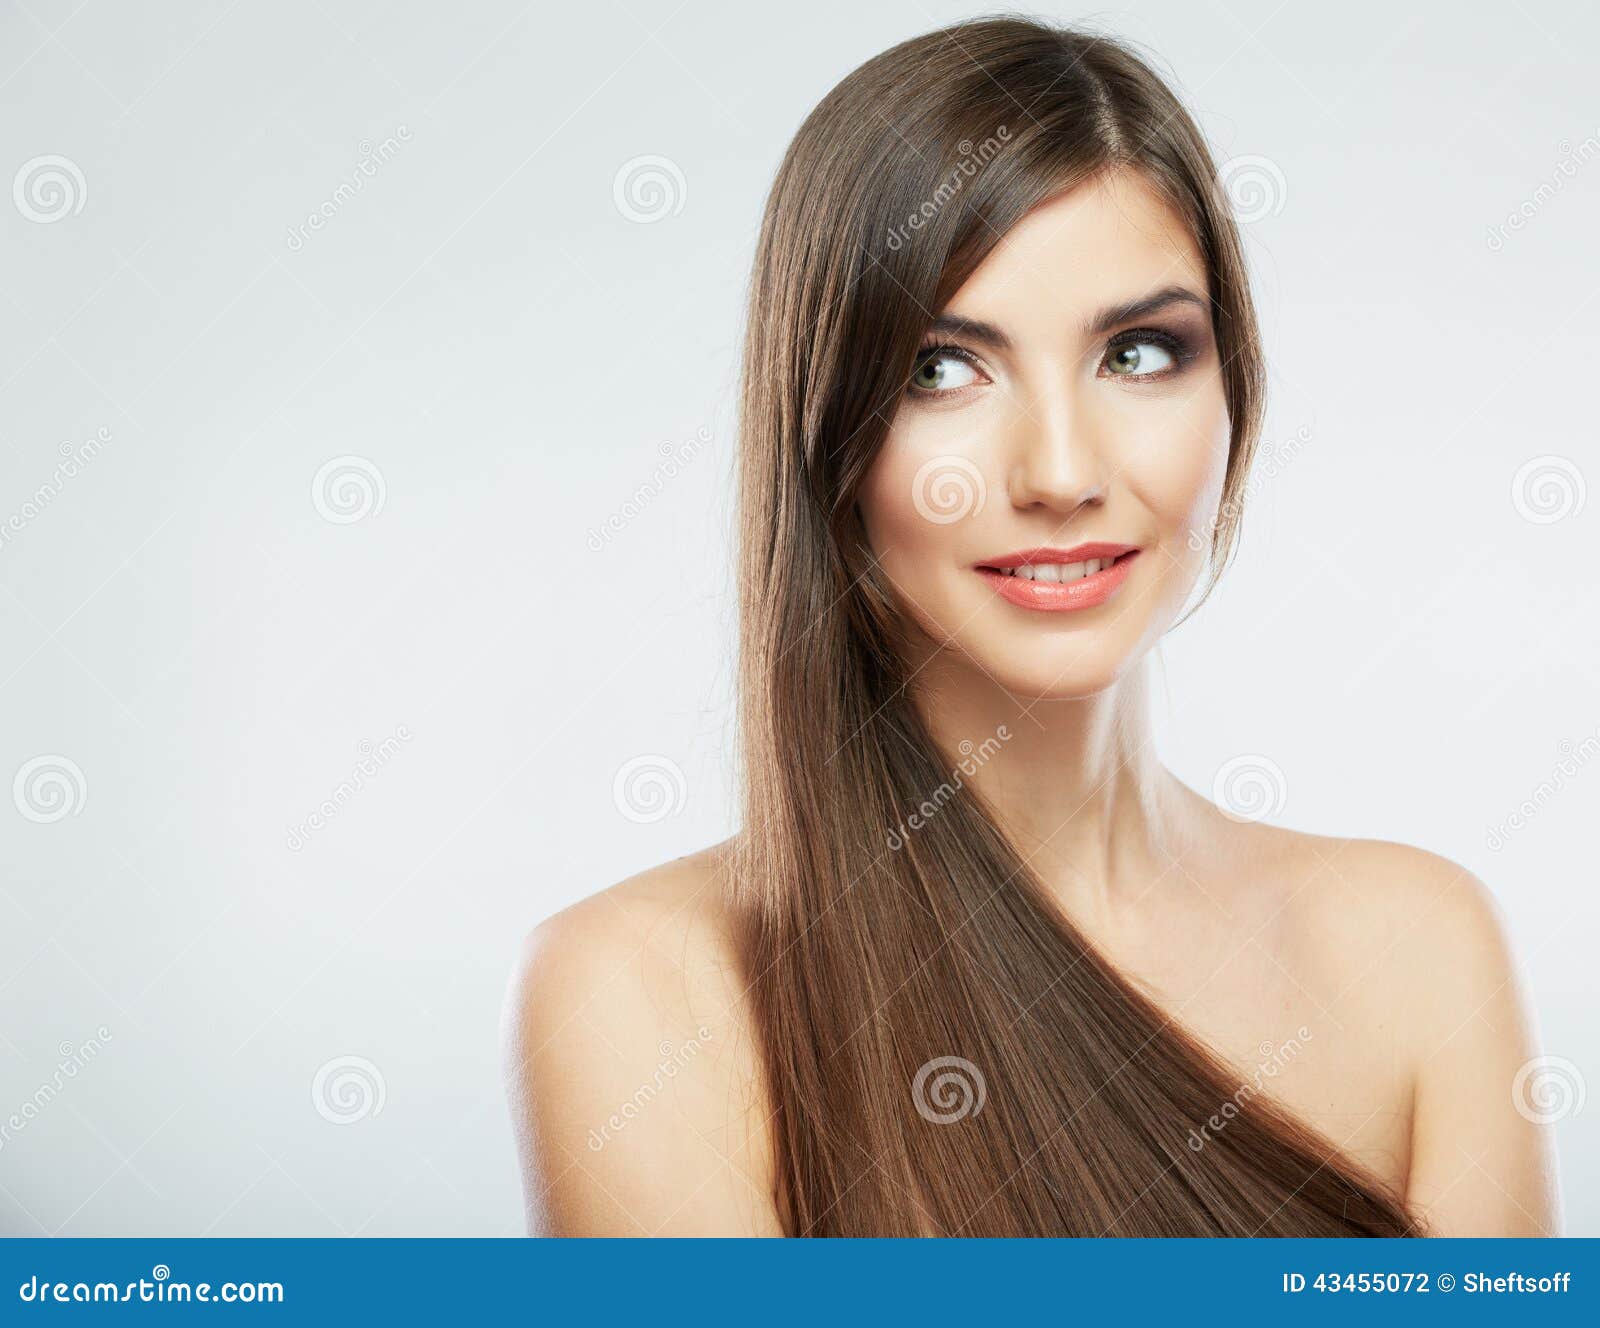 Beauty face woman close up portrait. Skin care beauty style .